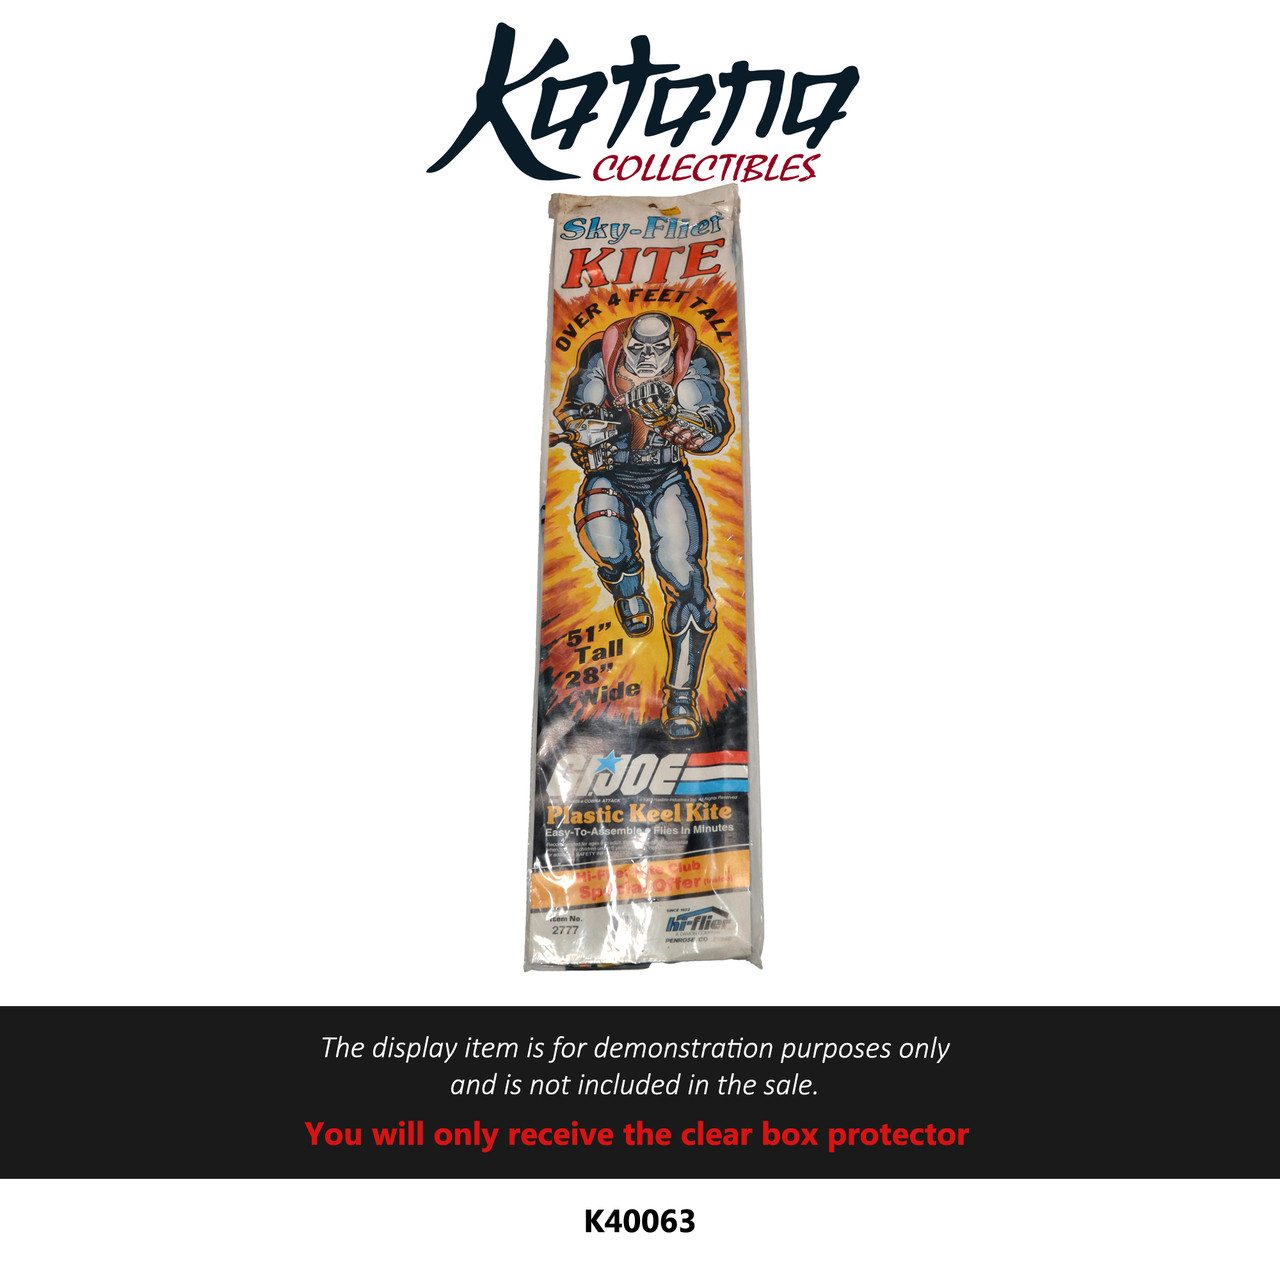 Katana Collectibles Protector For G.I. Joe Sky-Flier Plastic Keel Kite by hi-flier - Destro Light